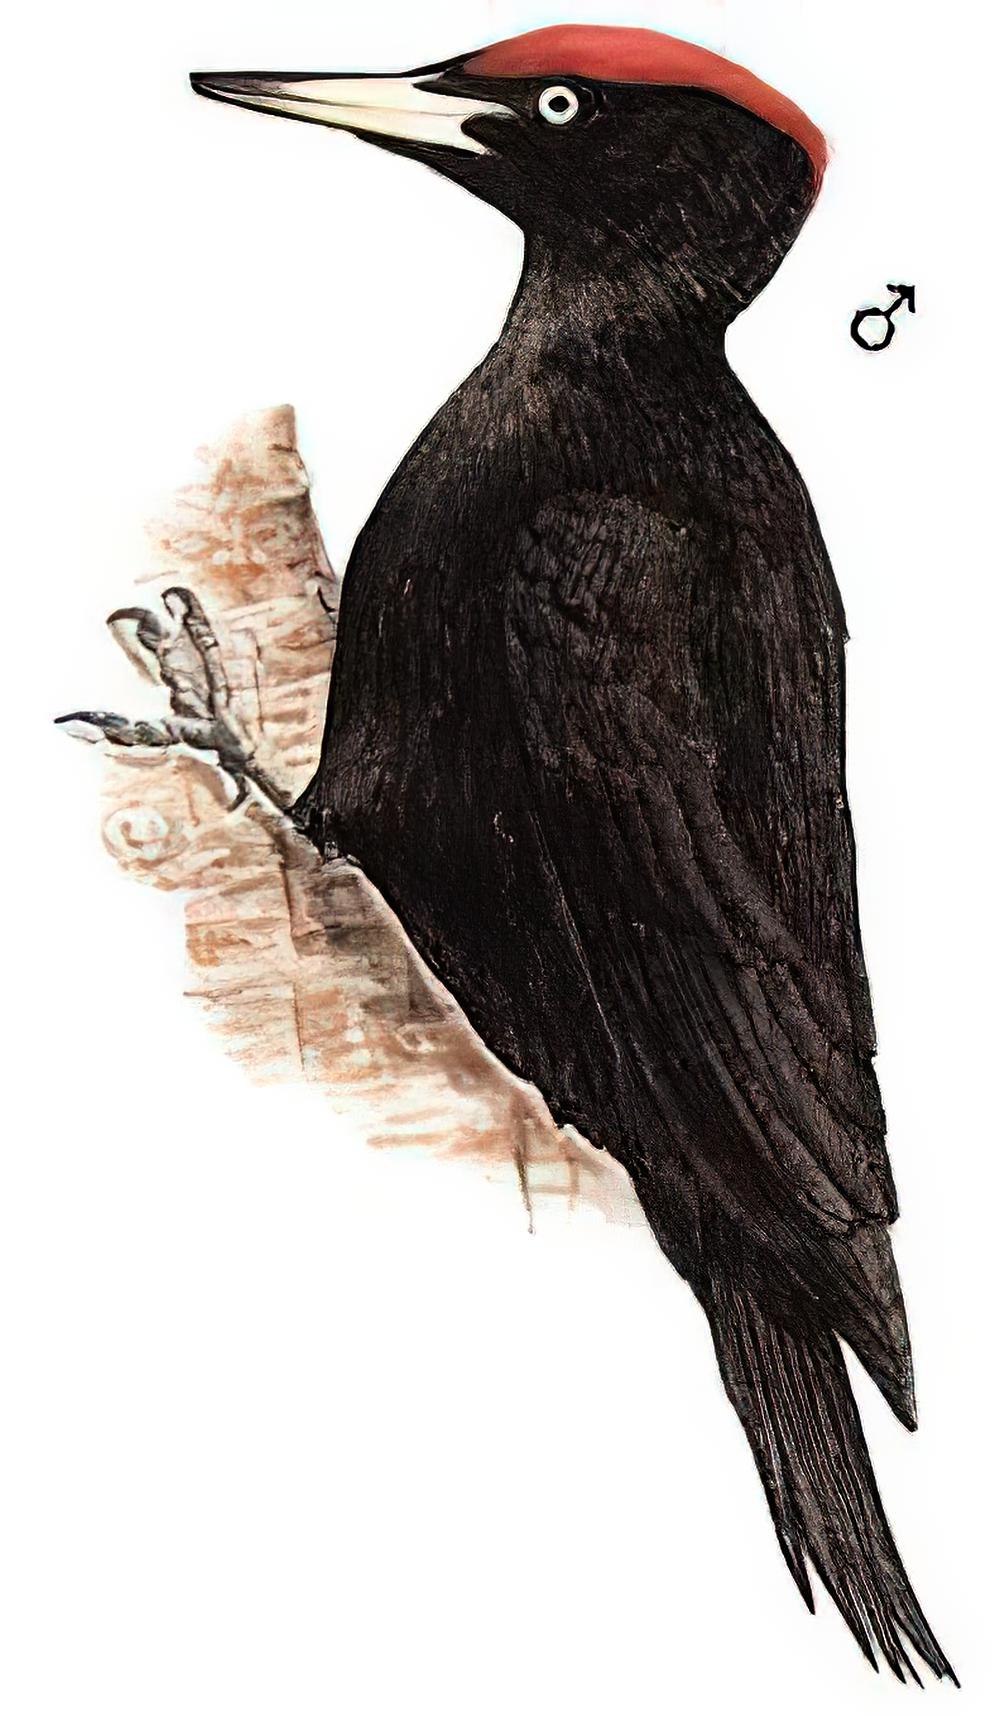 黑啄木鸟 / Black Woodpecker / Dryocopus martius